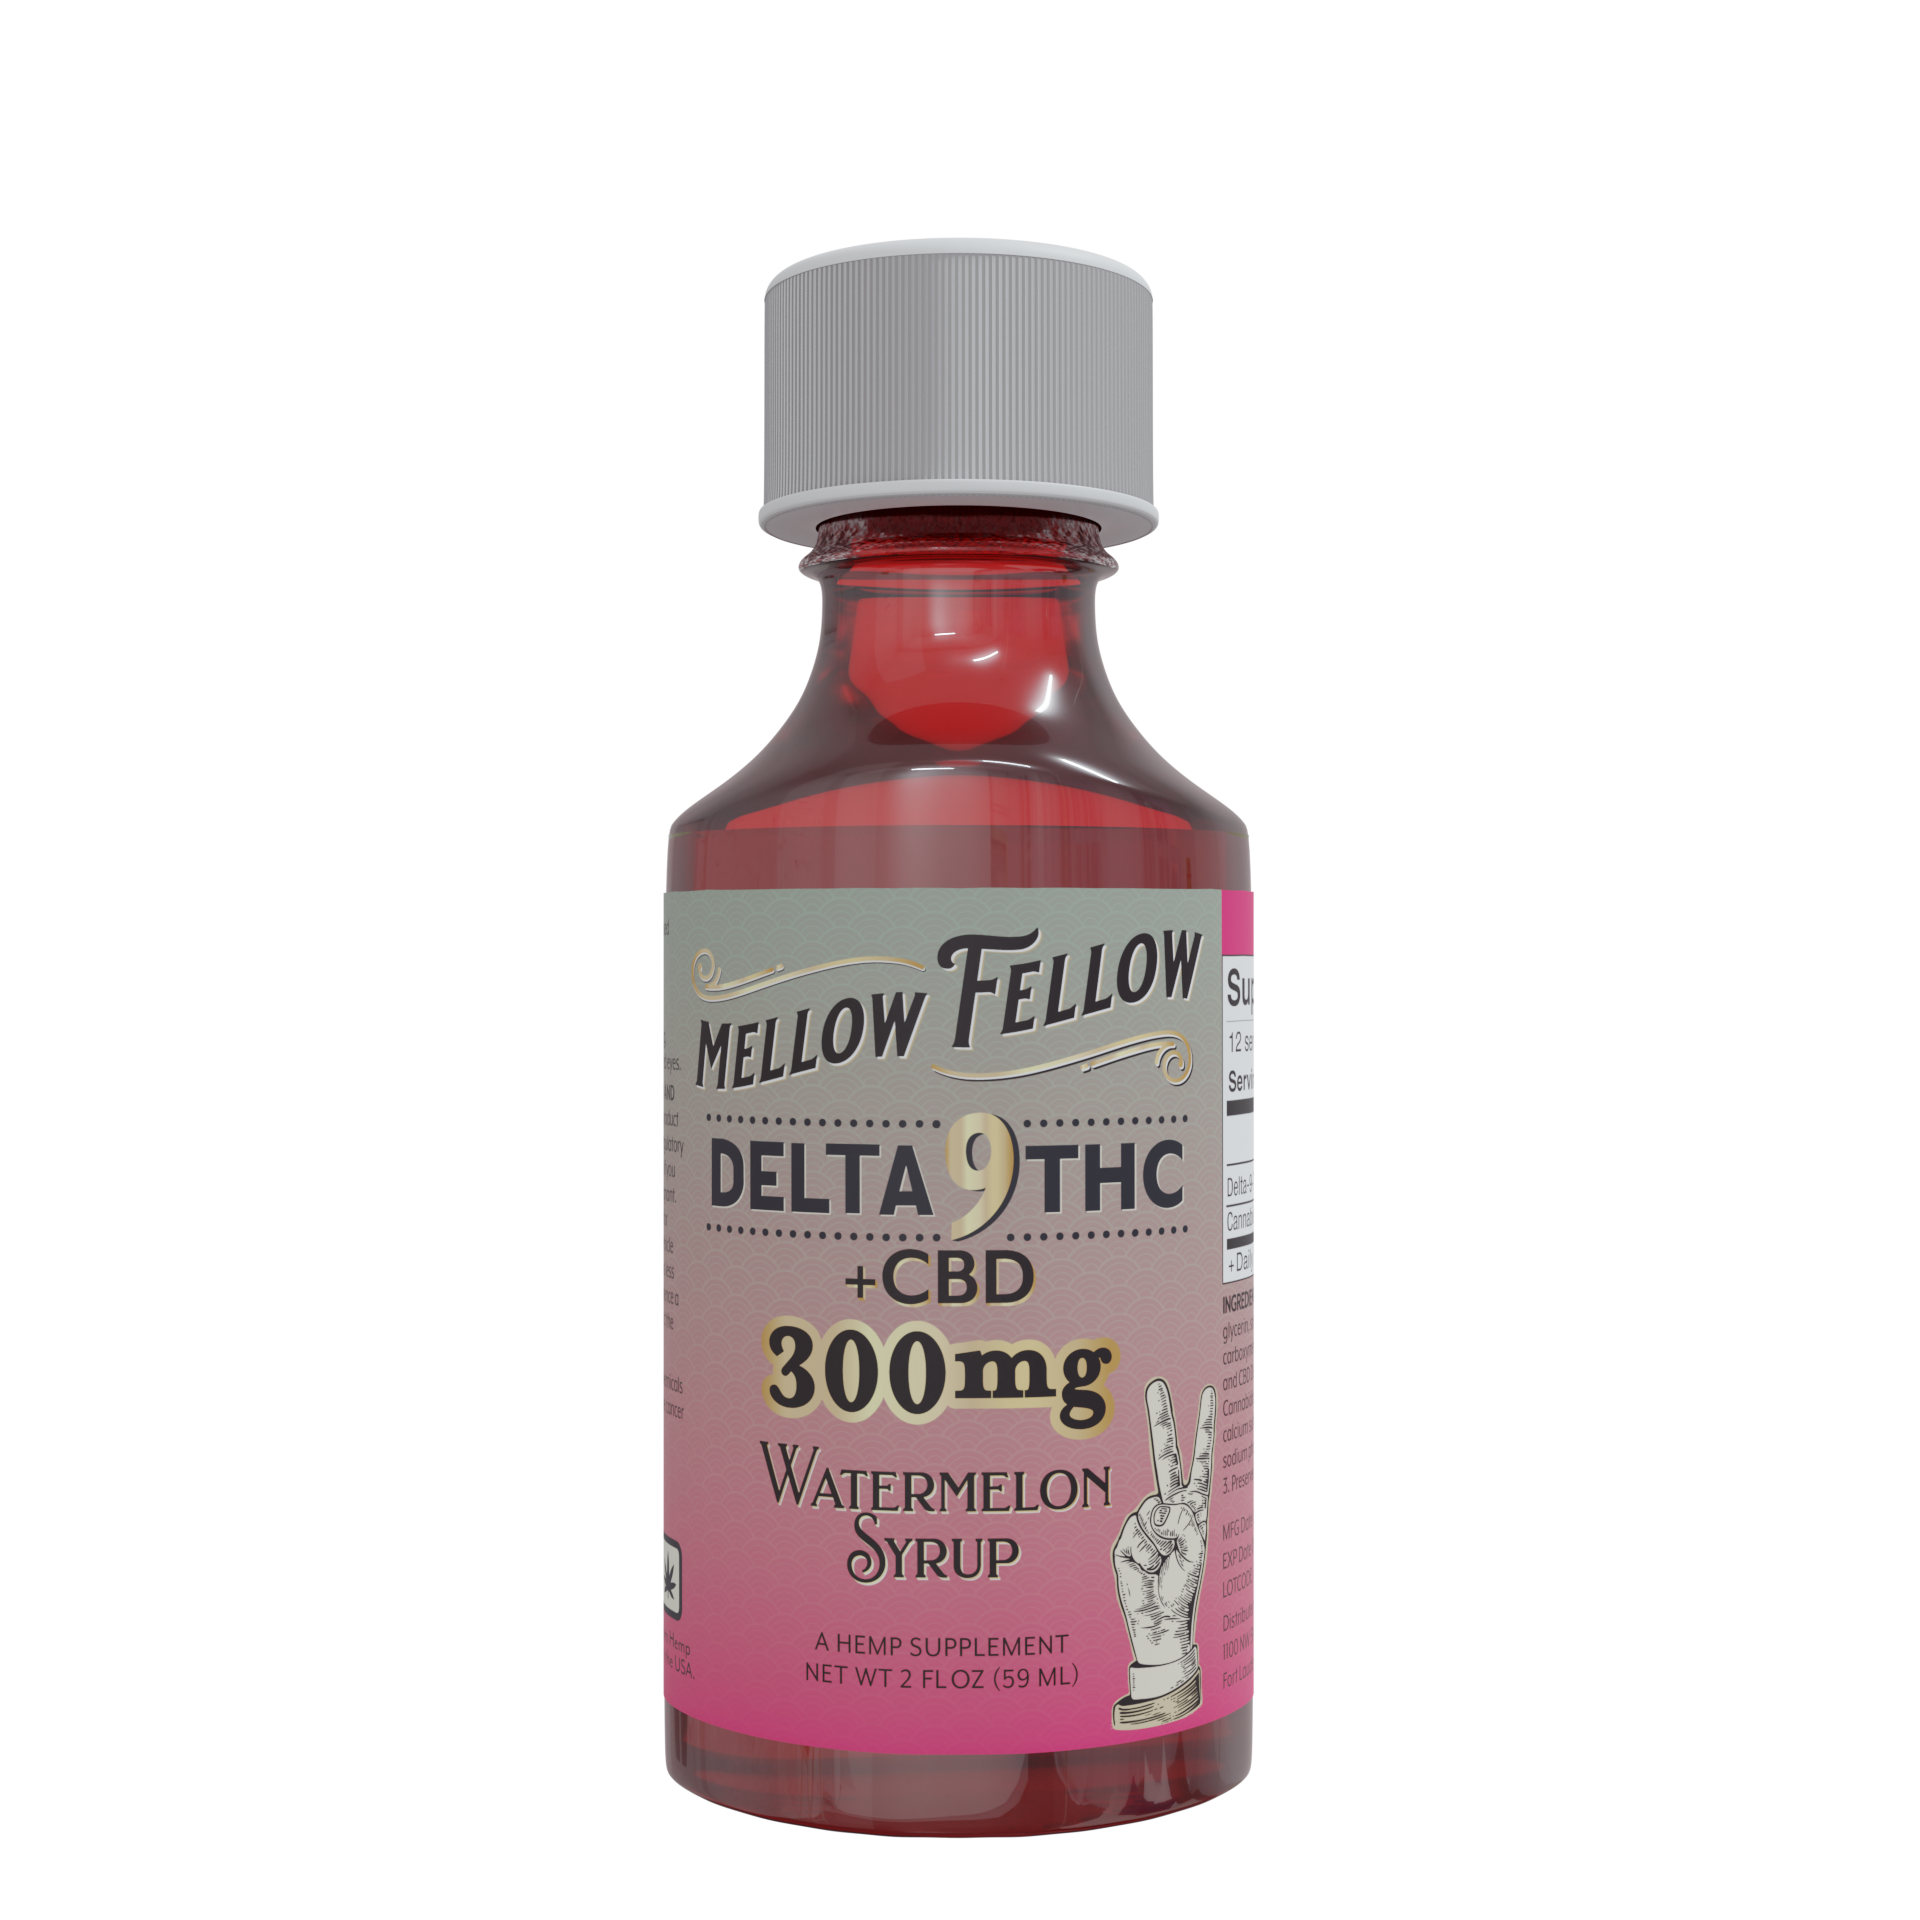 Mellow Fellow Delta 9 THC & CBD Watermelon Syrup Best Price